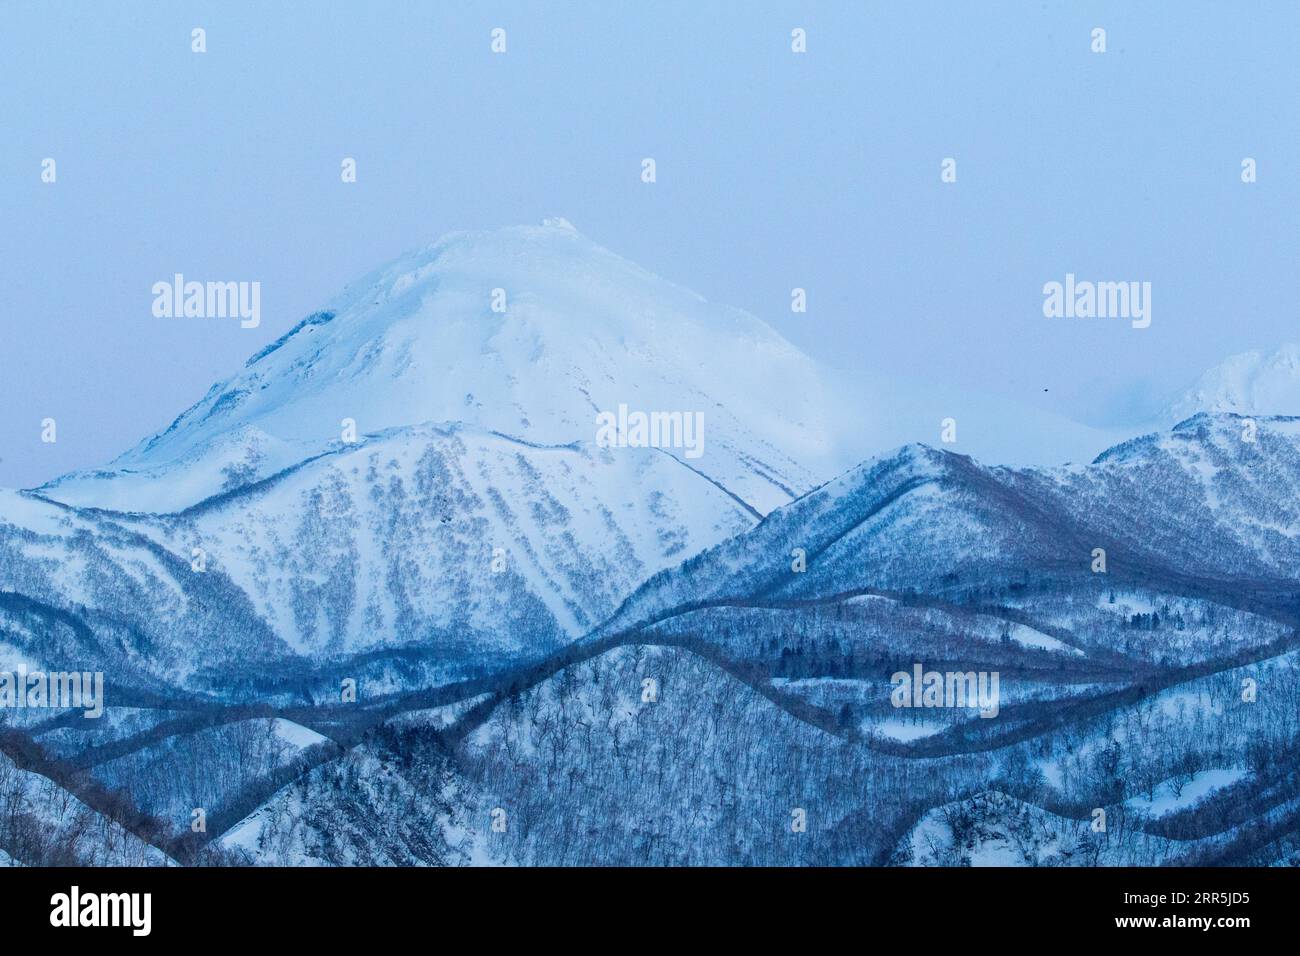 Mountain scenery of the island Hokkaido. Many hills and large mountains covered with snow. Hokkaido island, Japan Stock Photo